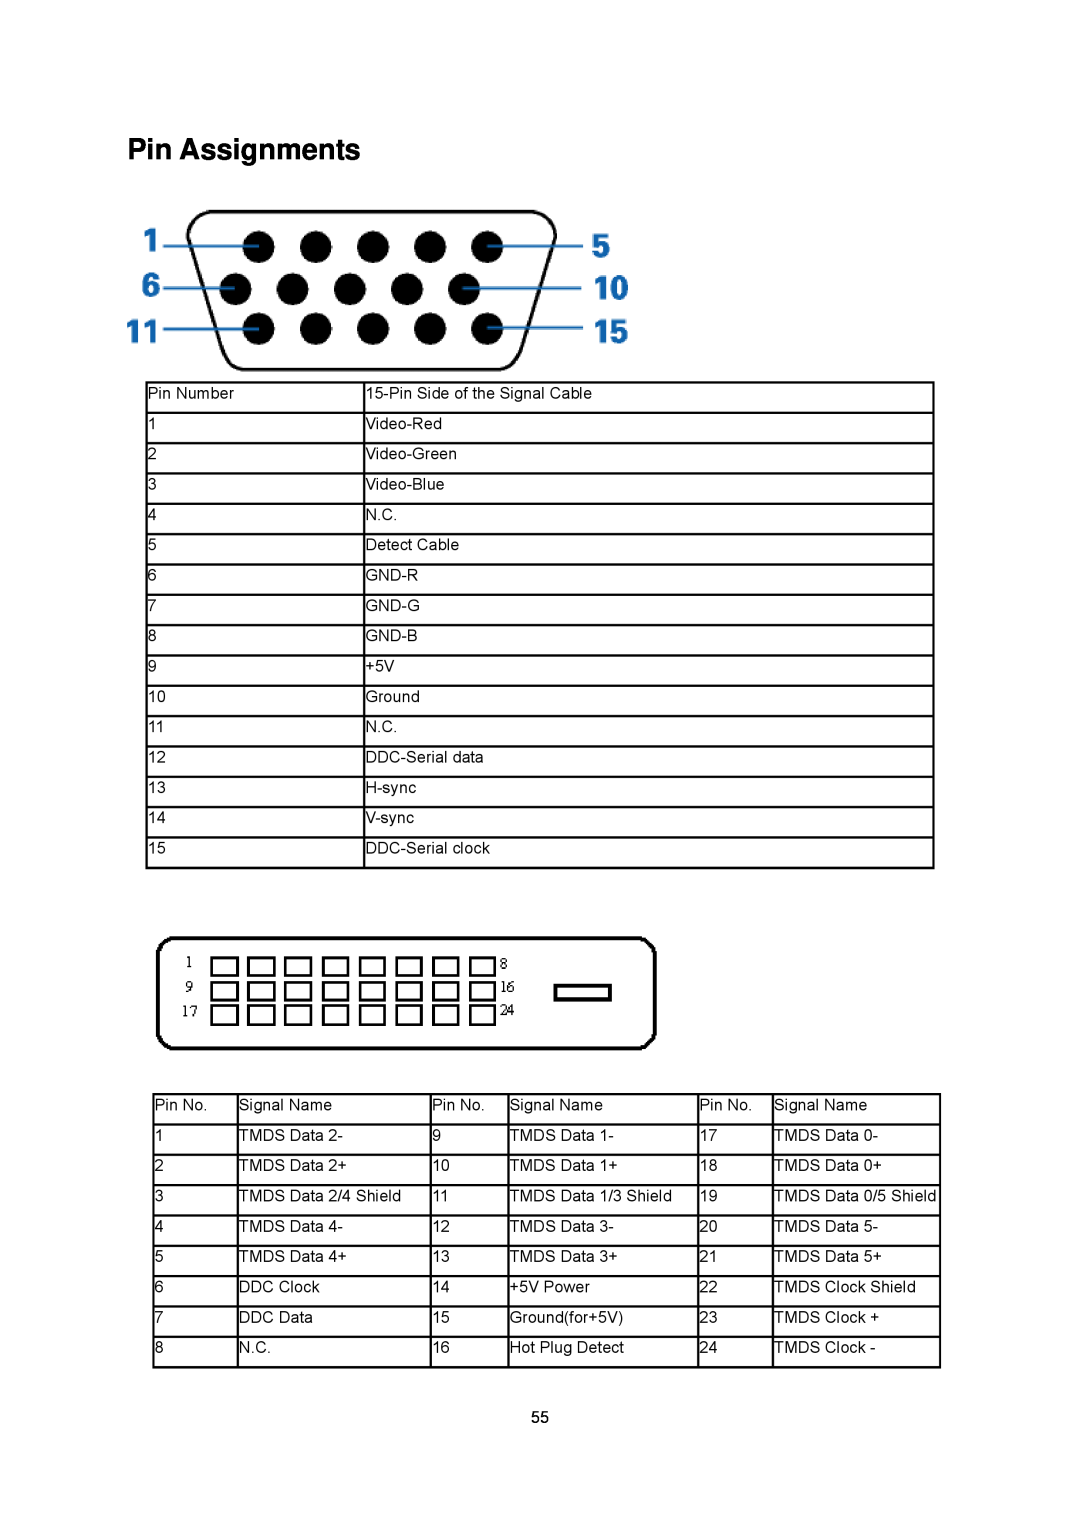 AOC E2243FWK, E2243FWU manual Pin Assignments, Pin Side of the Signal Cable, TMDS Data 0/5 Shield 